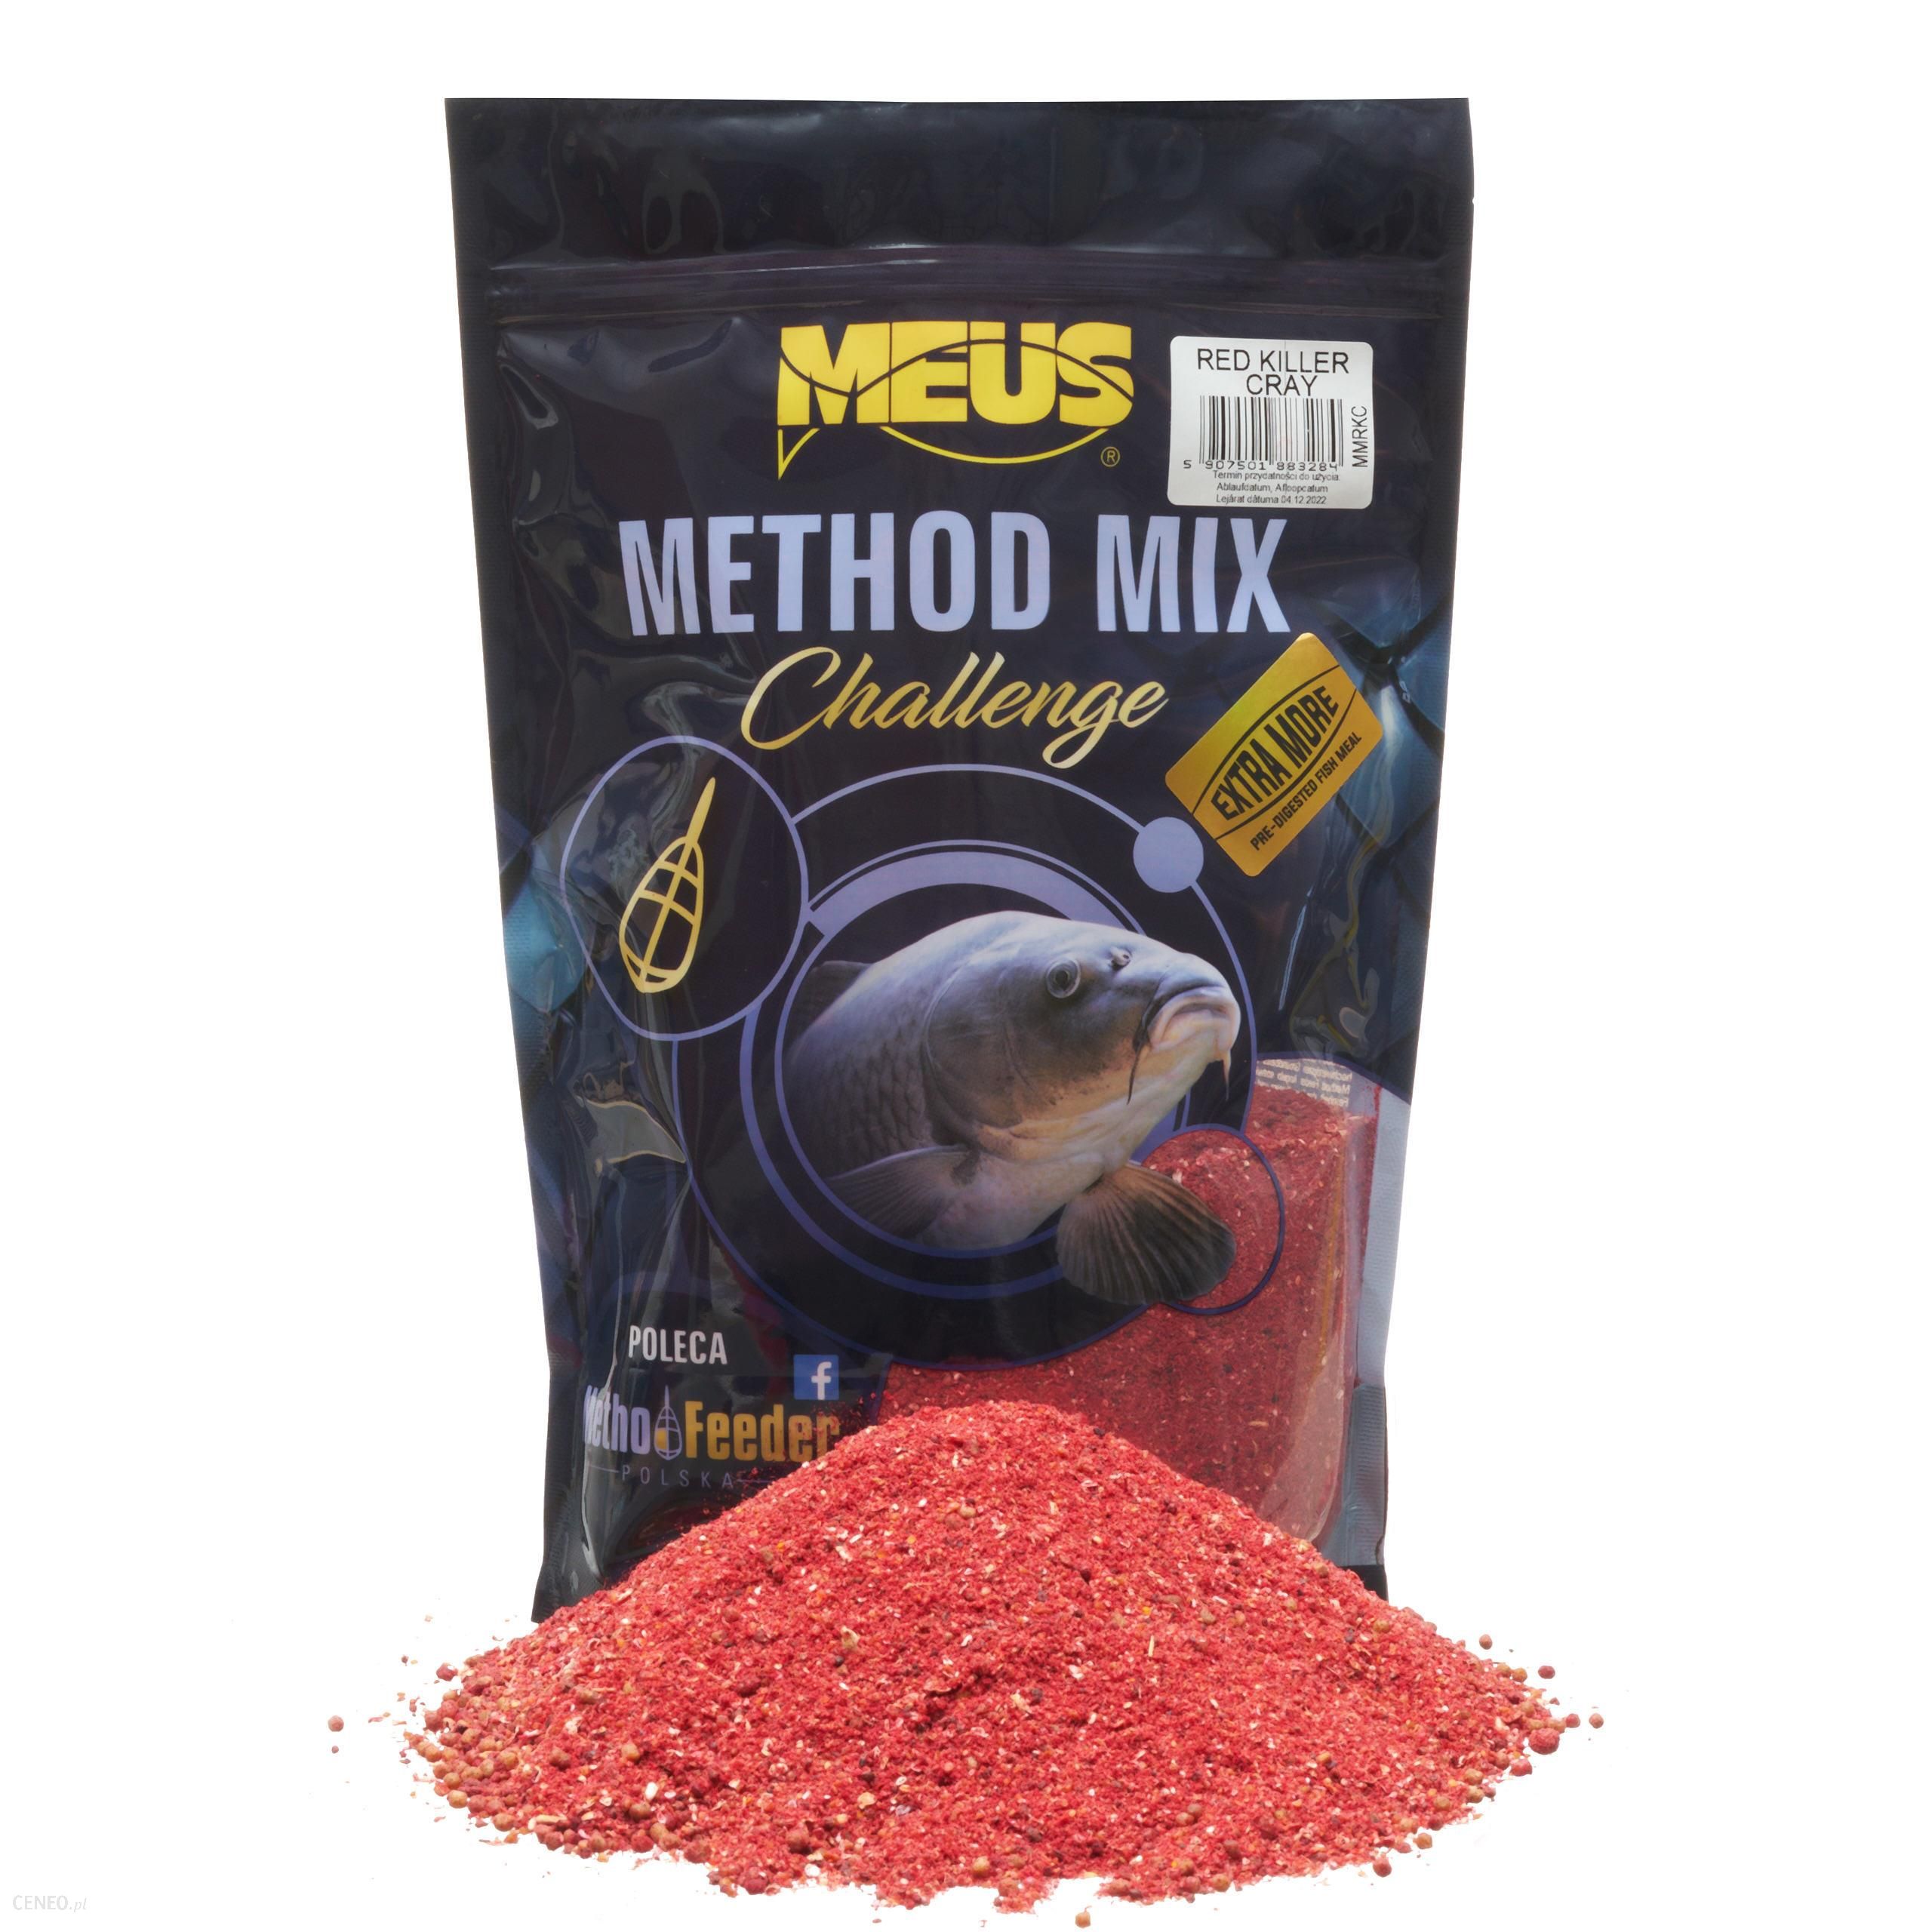 Meus Method Feeder Mix Red Killer Cray